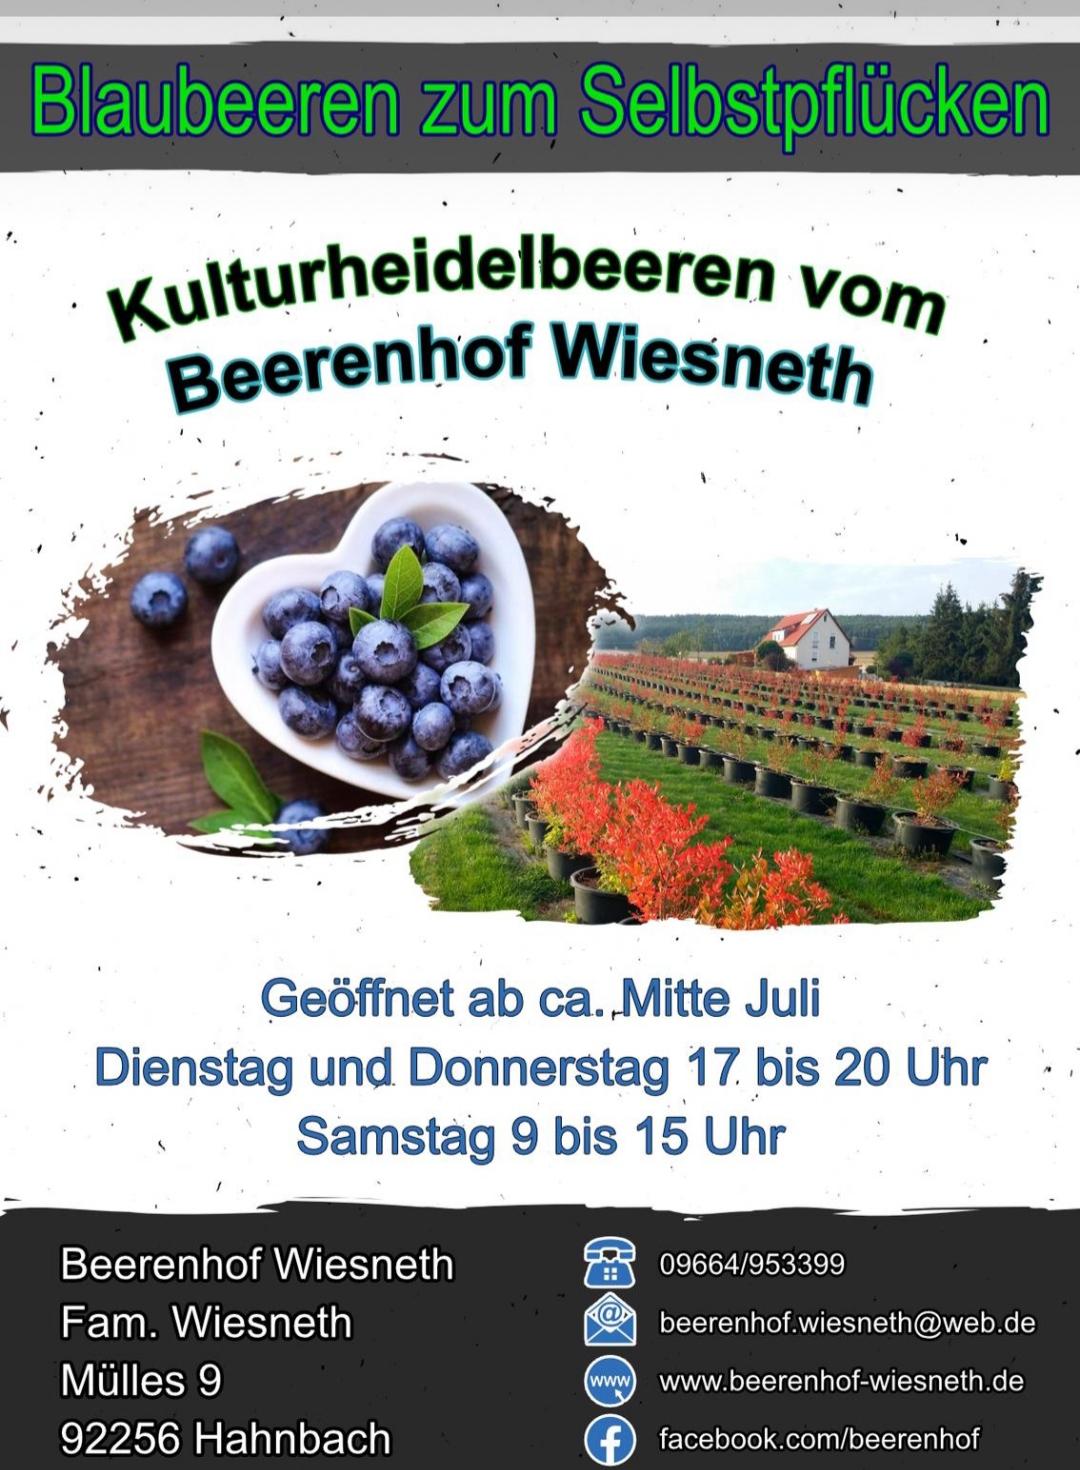 Beerenhof Wiesneth